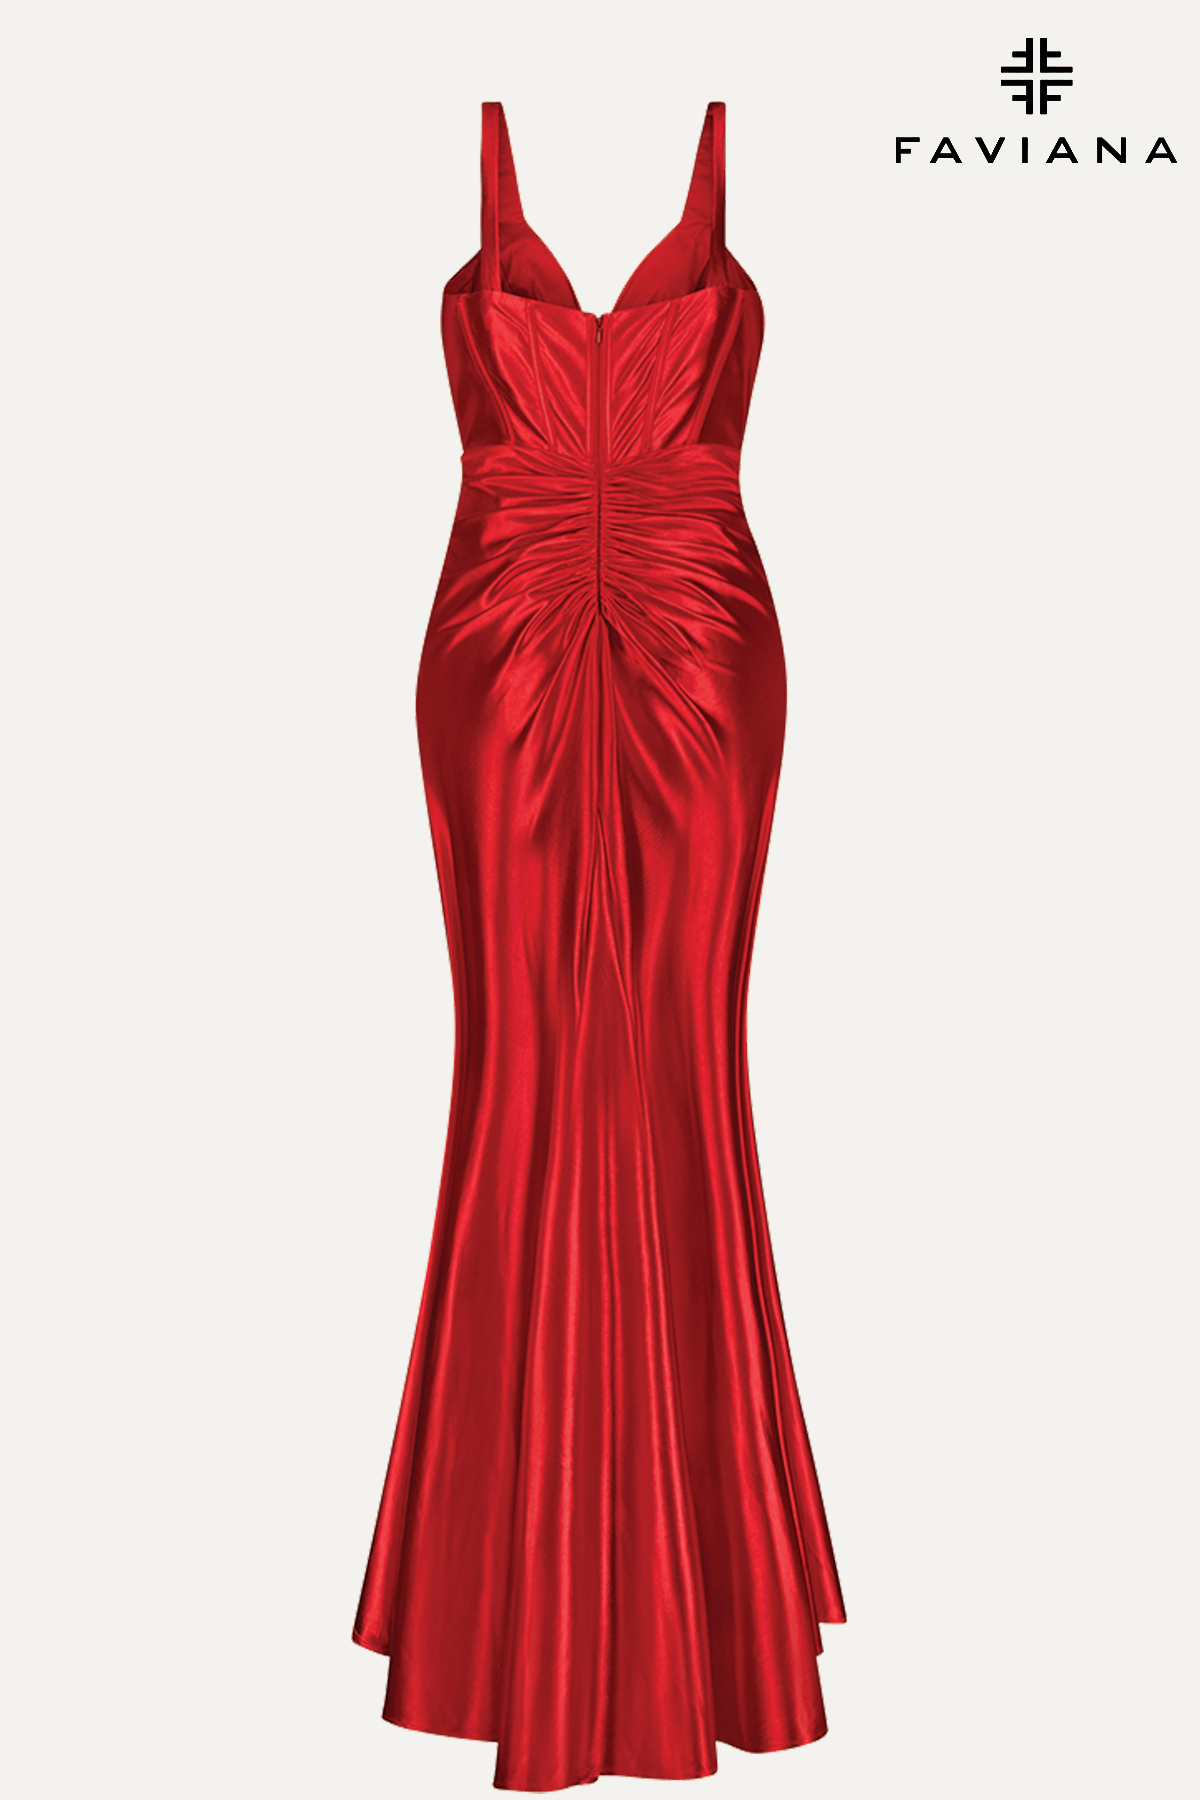 Sleek Satin Corset Gown With Boning Detail | E11088